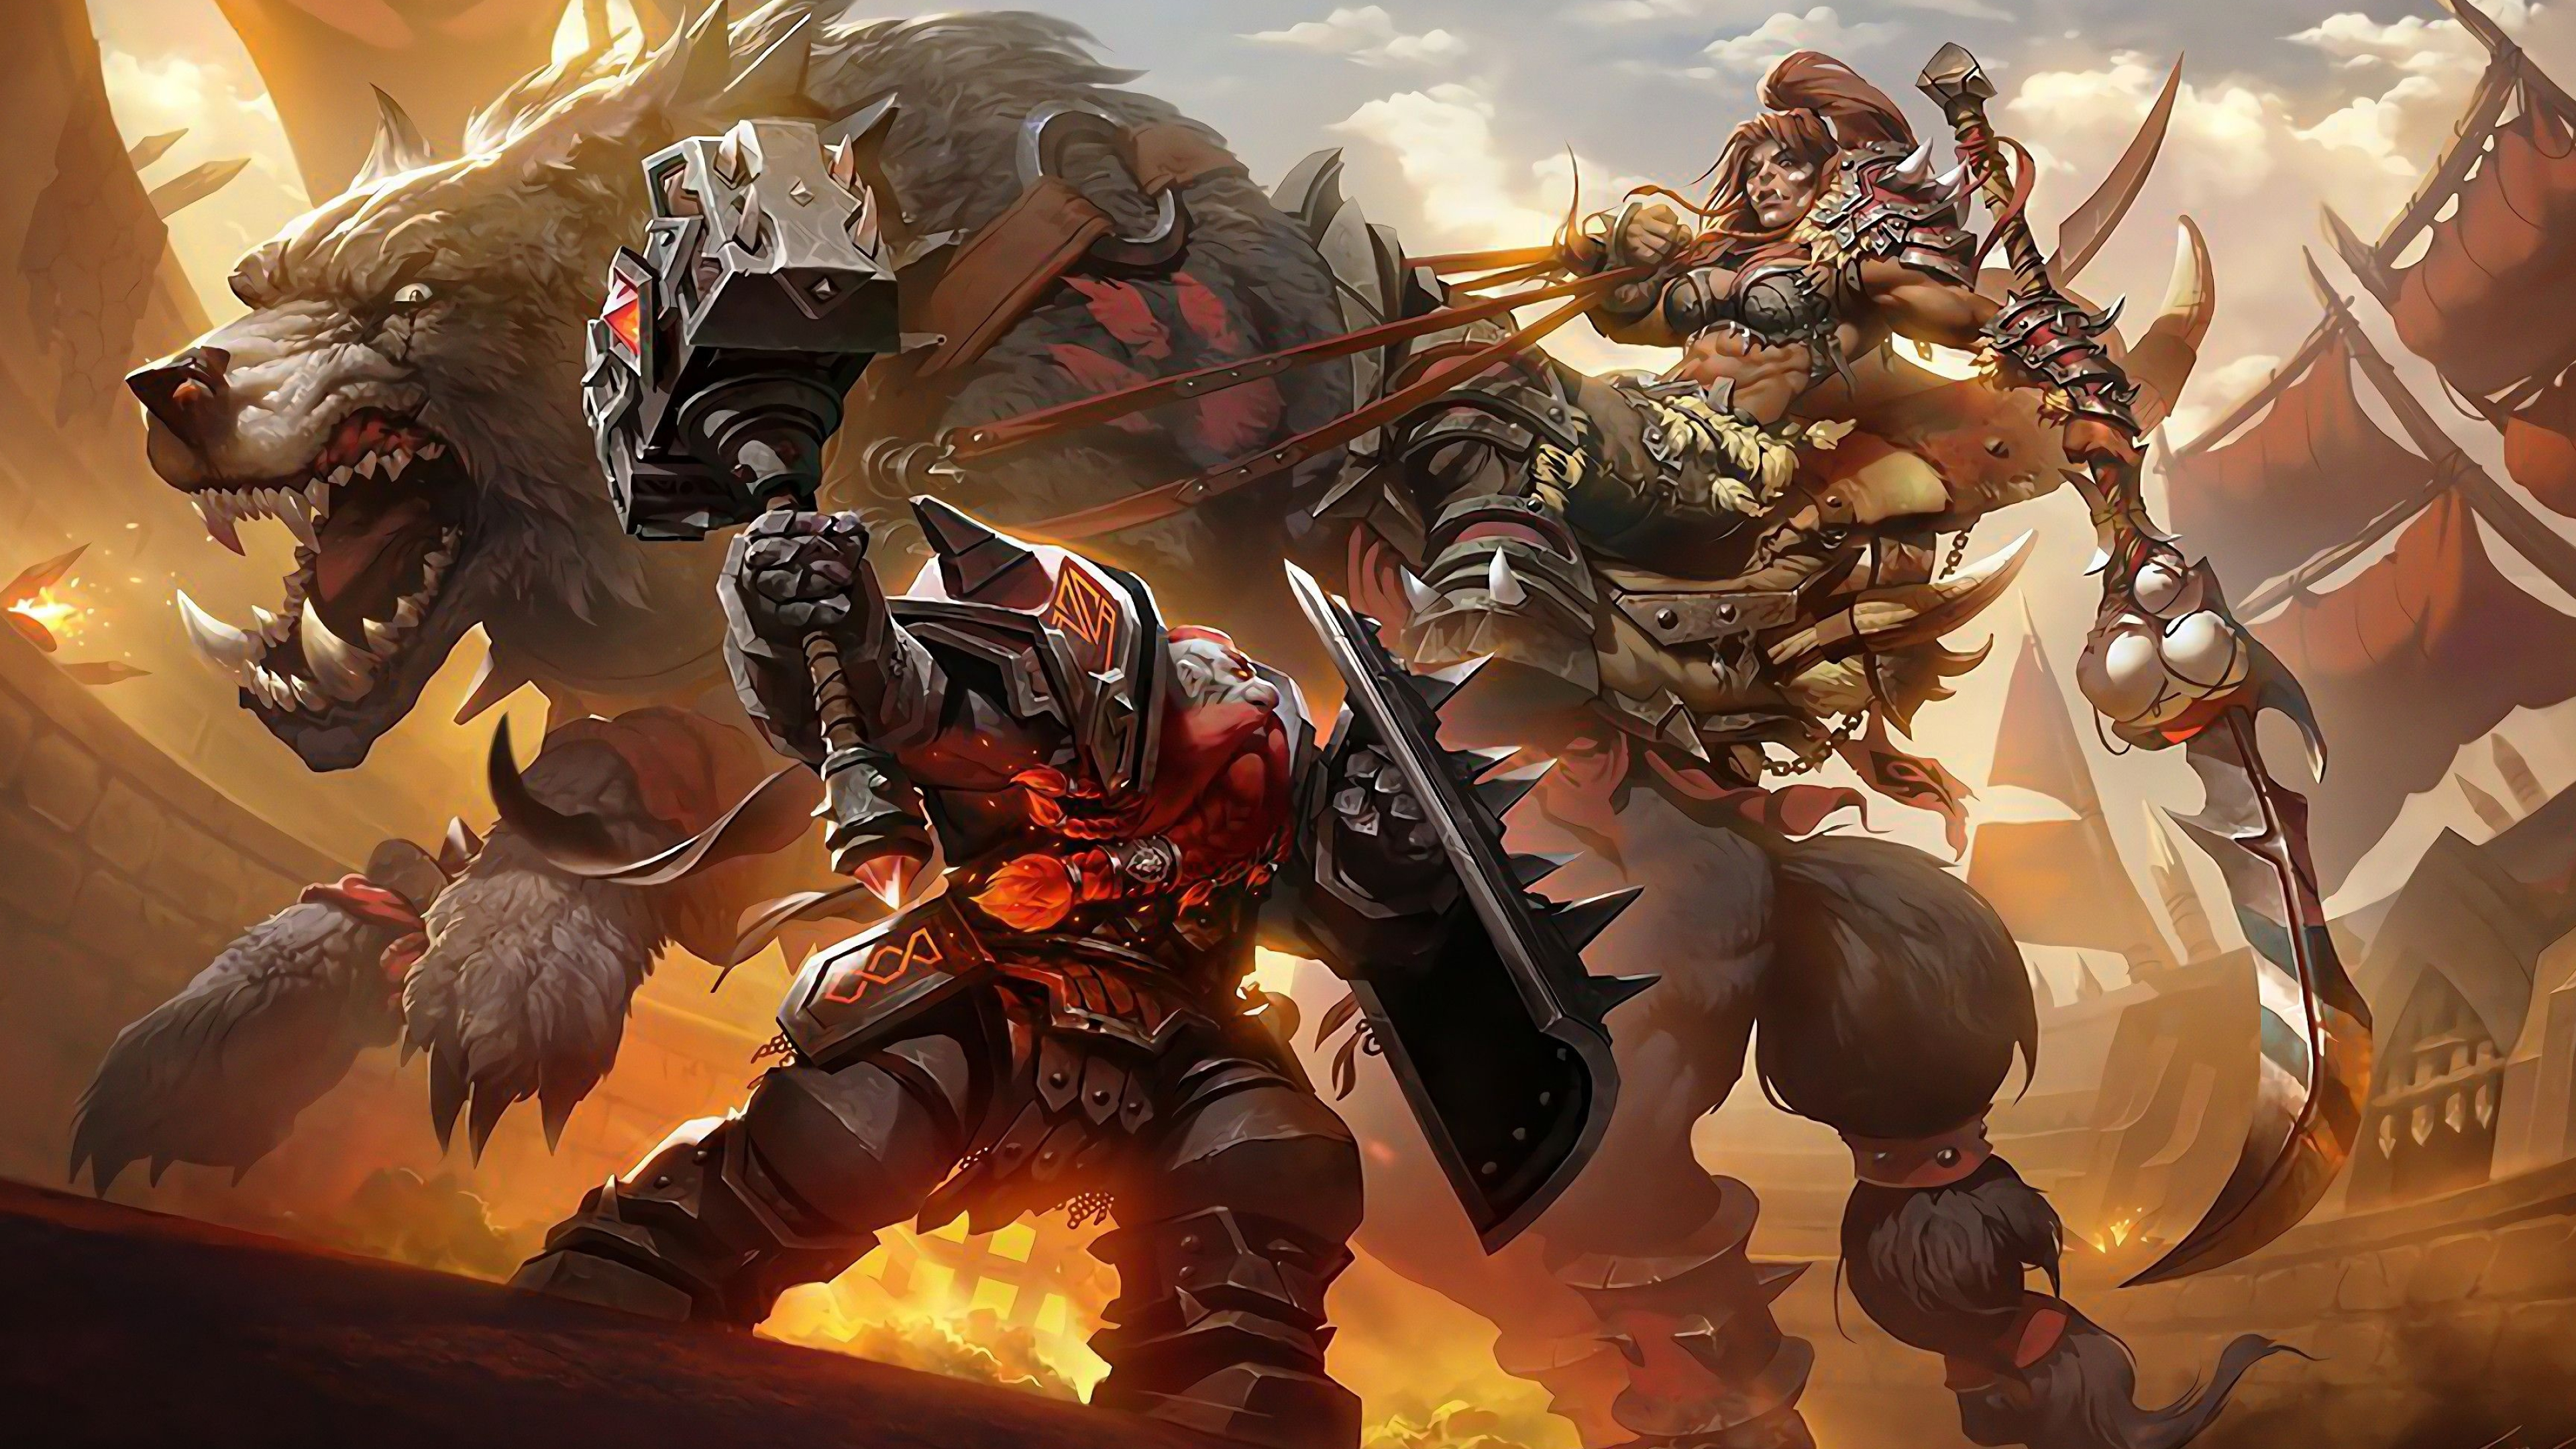 Warcraft Orc wallpapers, Fantasy creatures, Epic backgrounds, Powerful warriors, 3840x2160 4K Desktop